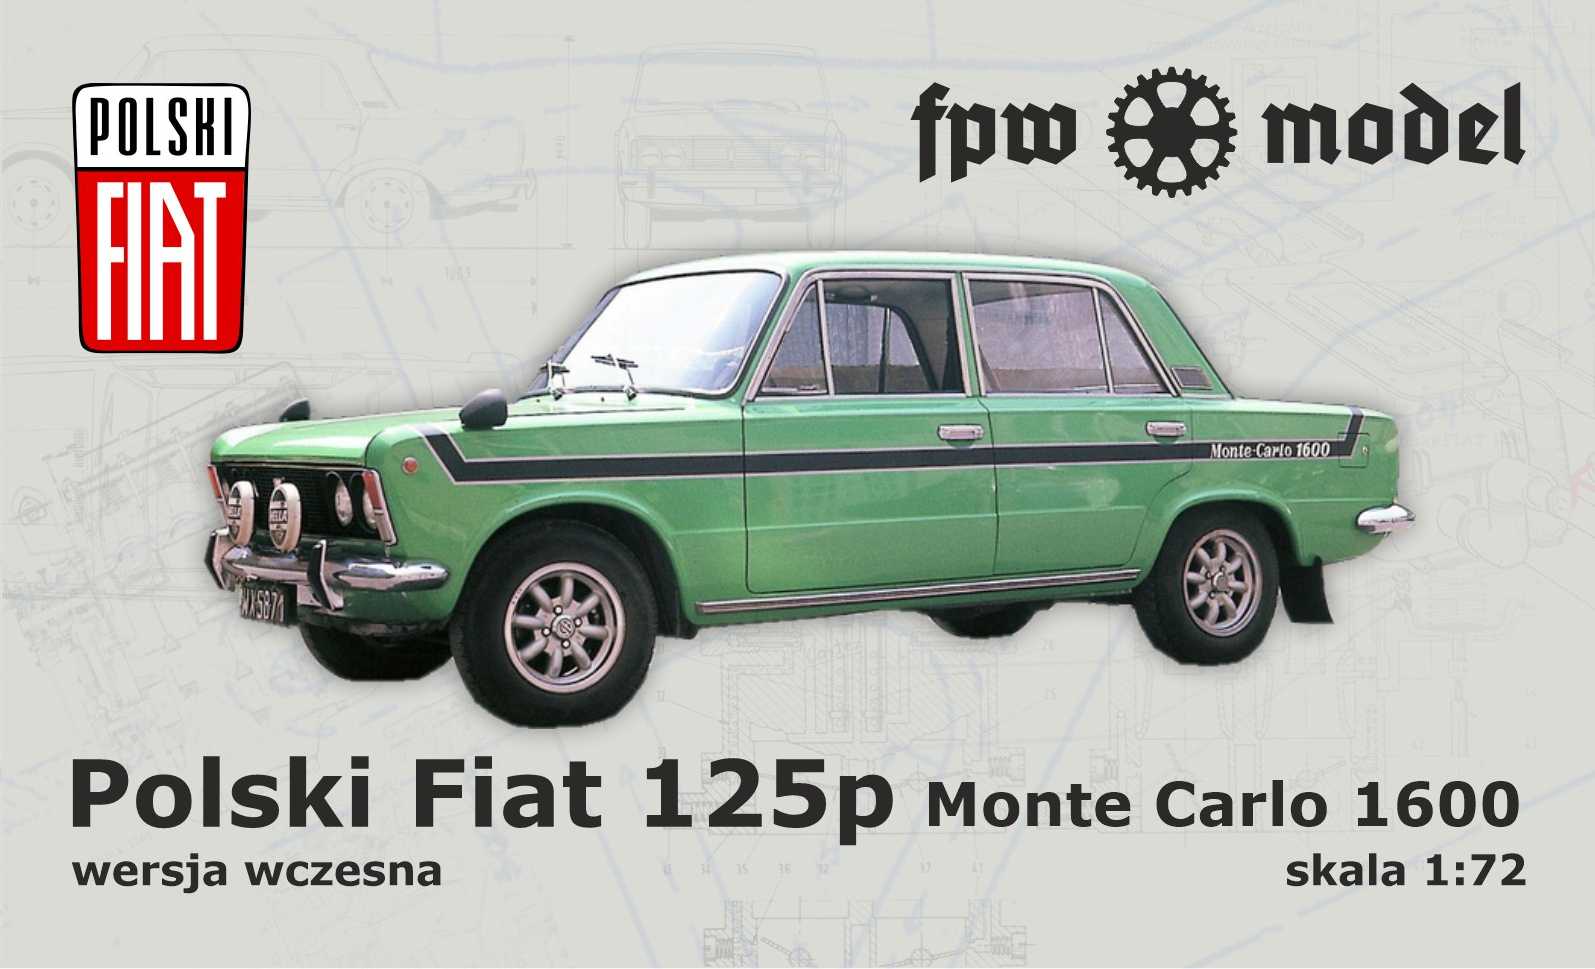 Polski Fiat 125p - early "Monte Carlo 1600"